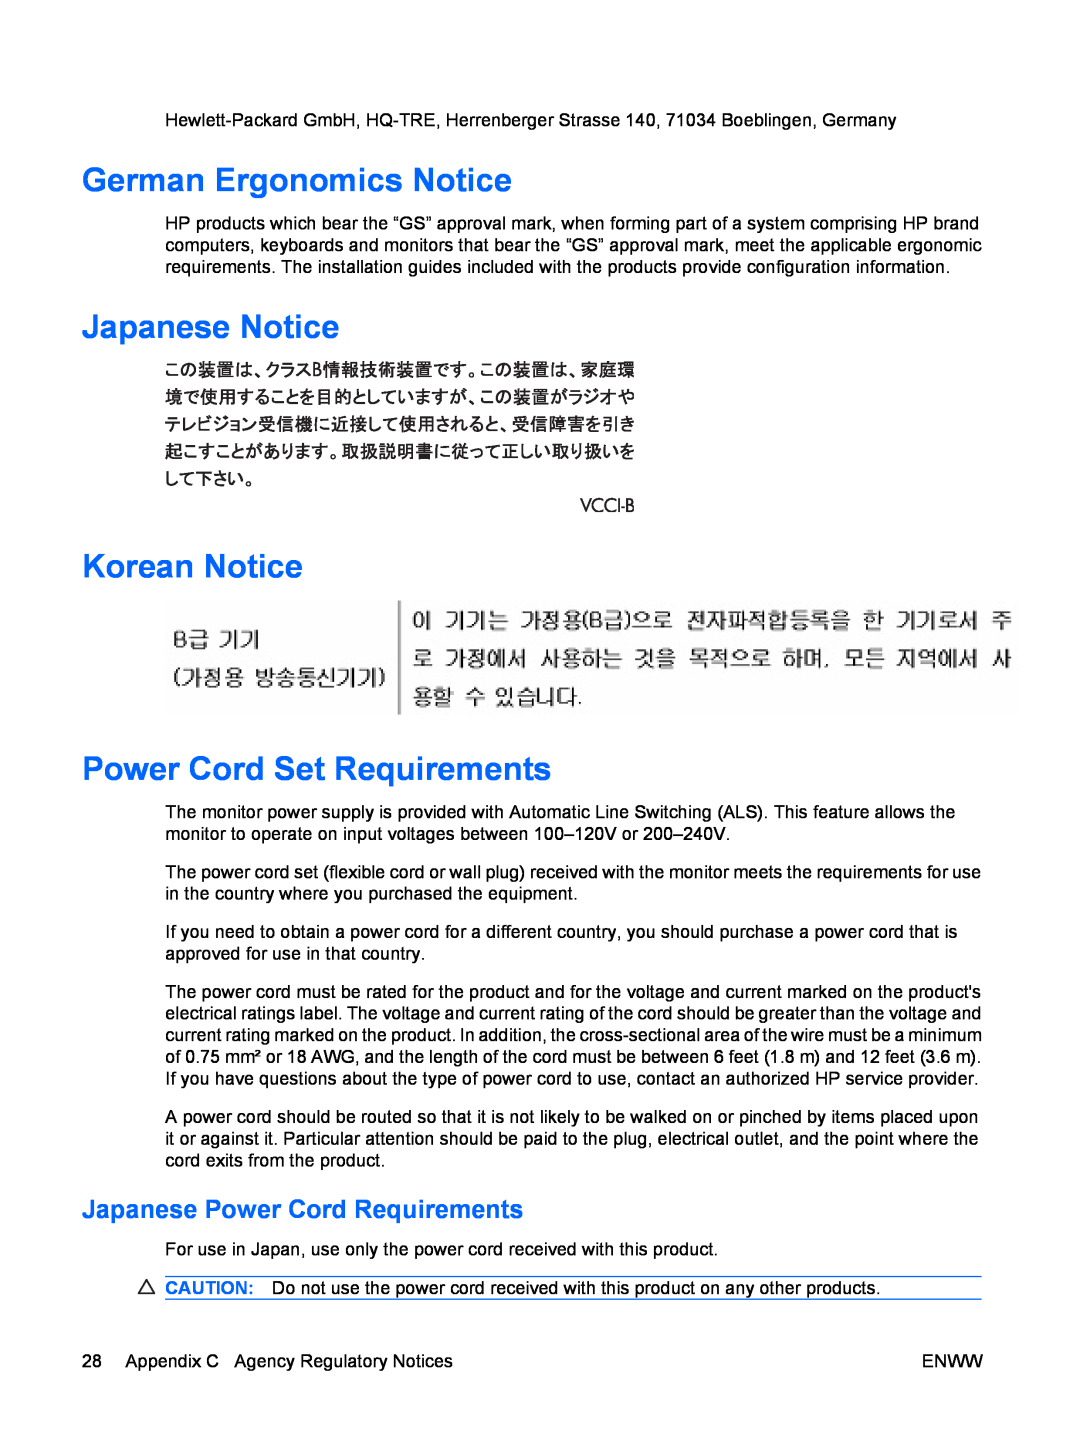 HP CQ1859E manual German Ergonomics Notice, Japanese Notice Korean Notice Power Cord Set Requirements 